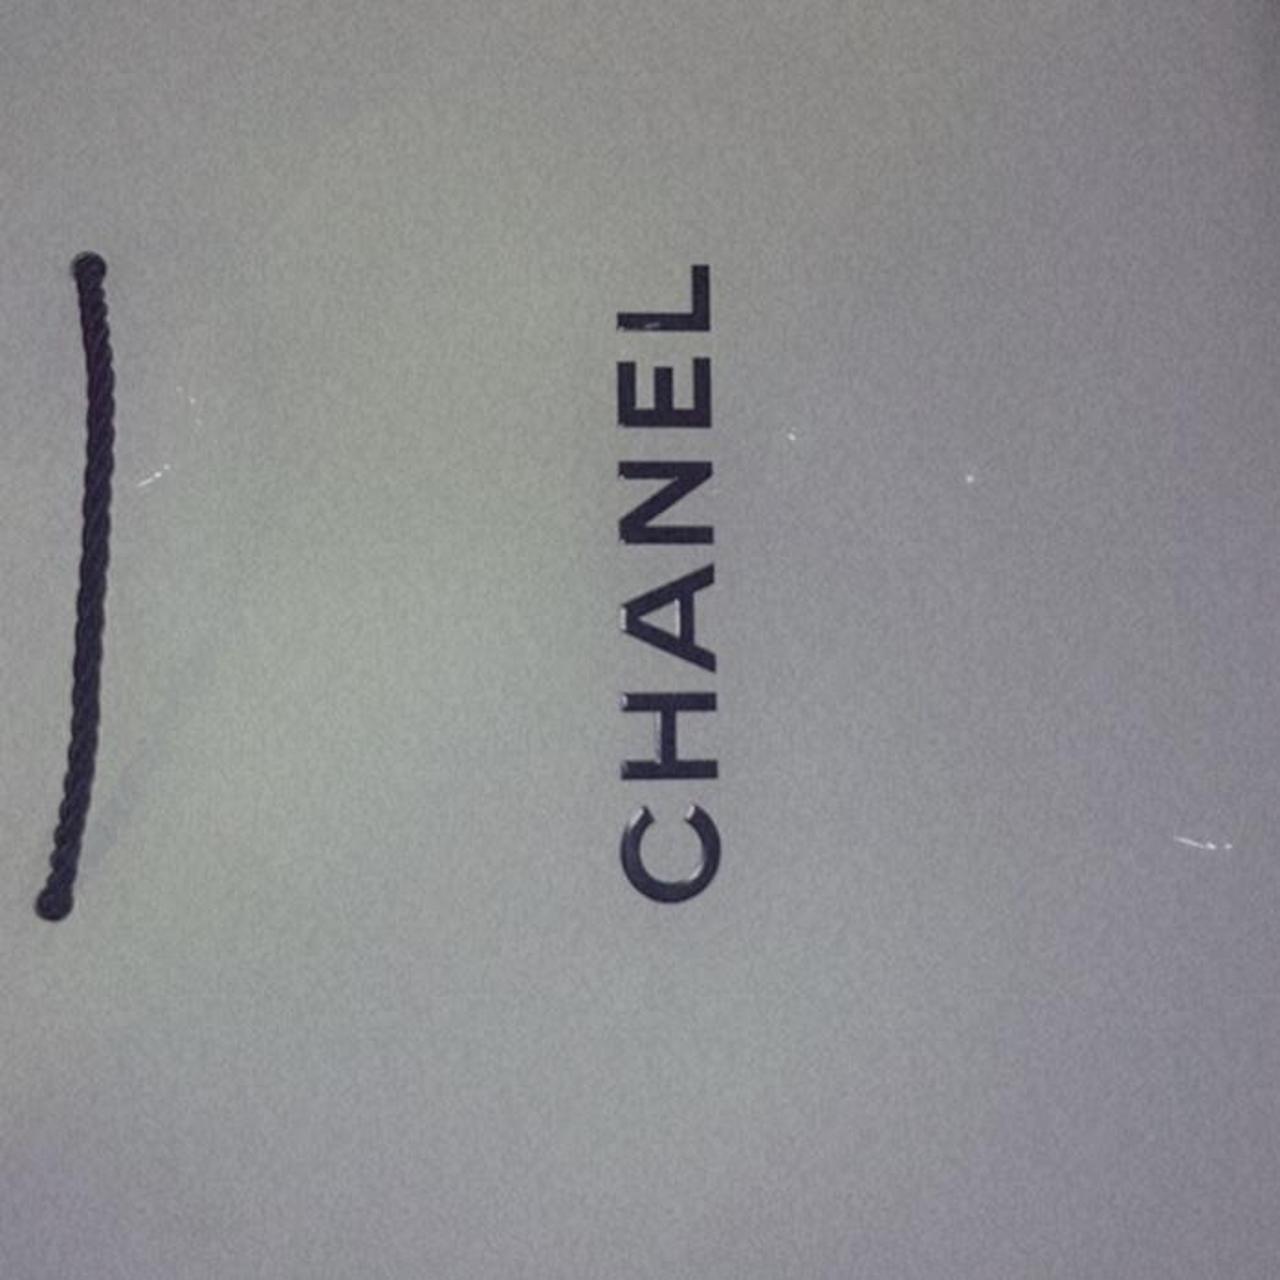 Chanel Beaute Drawstring Canvas Makeup Bag VIP gift - Depop